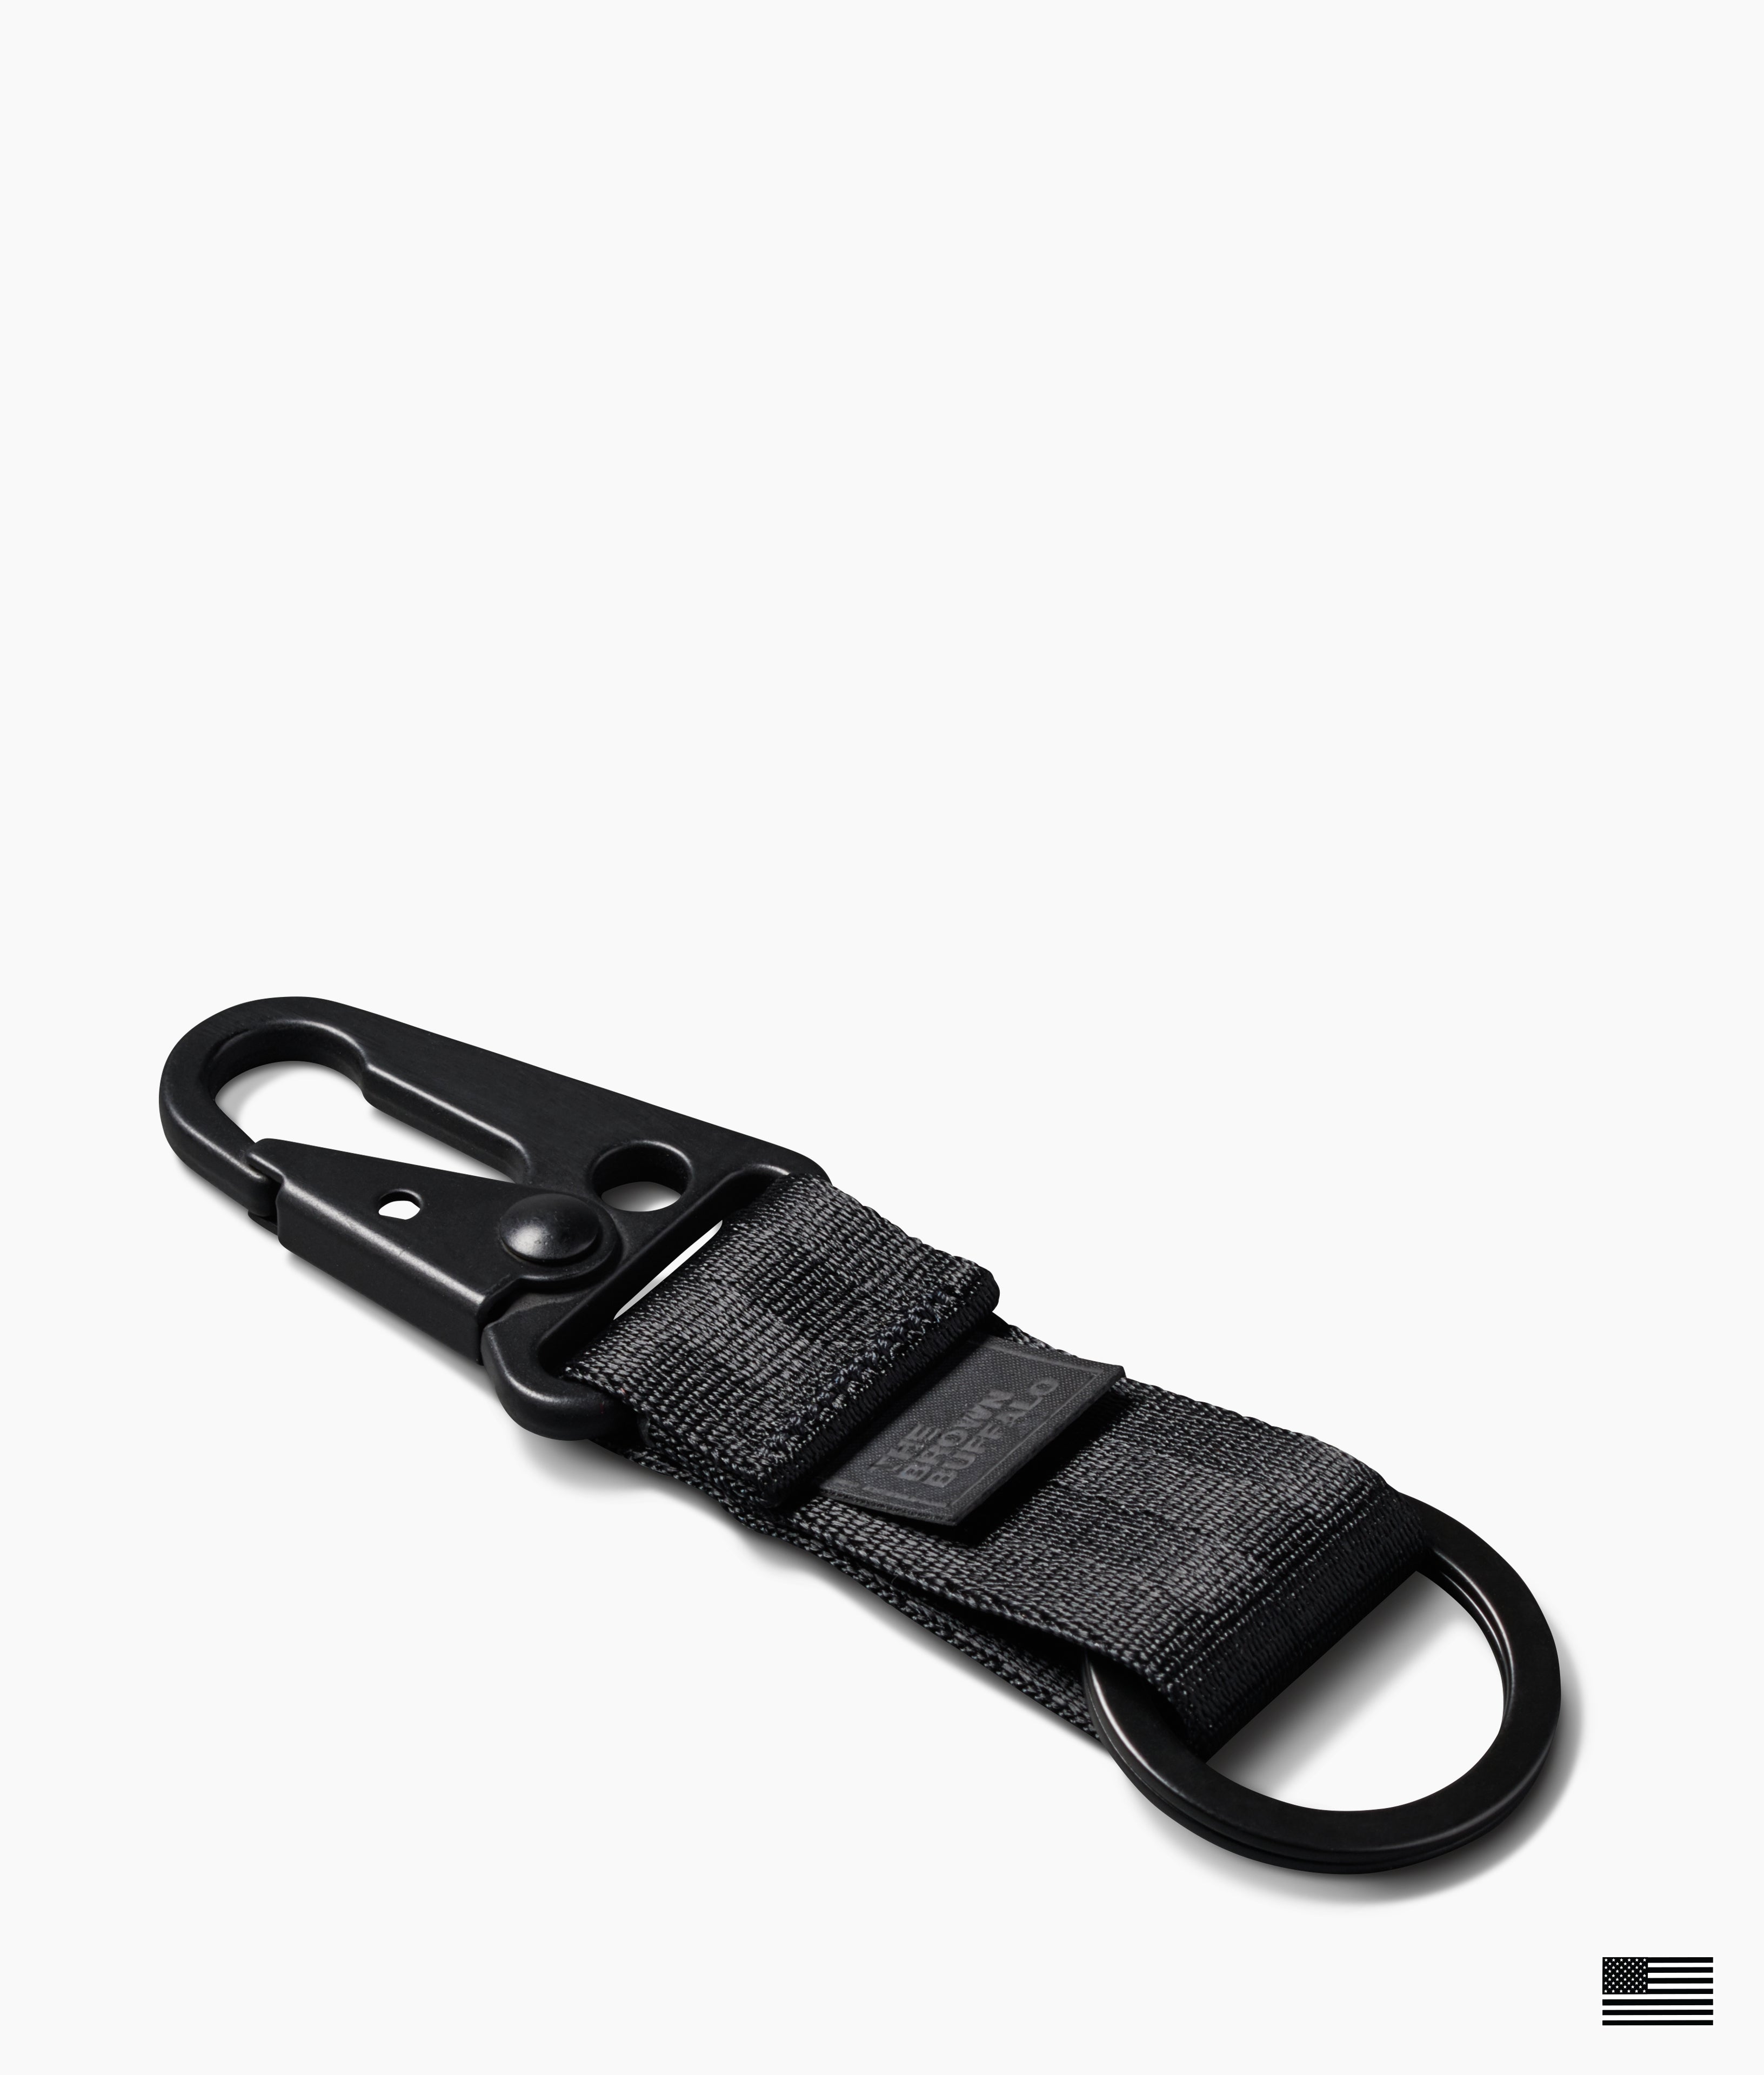 Jobber Keychain - Massive Black